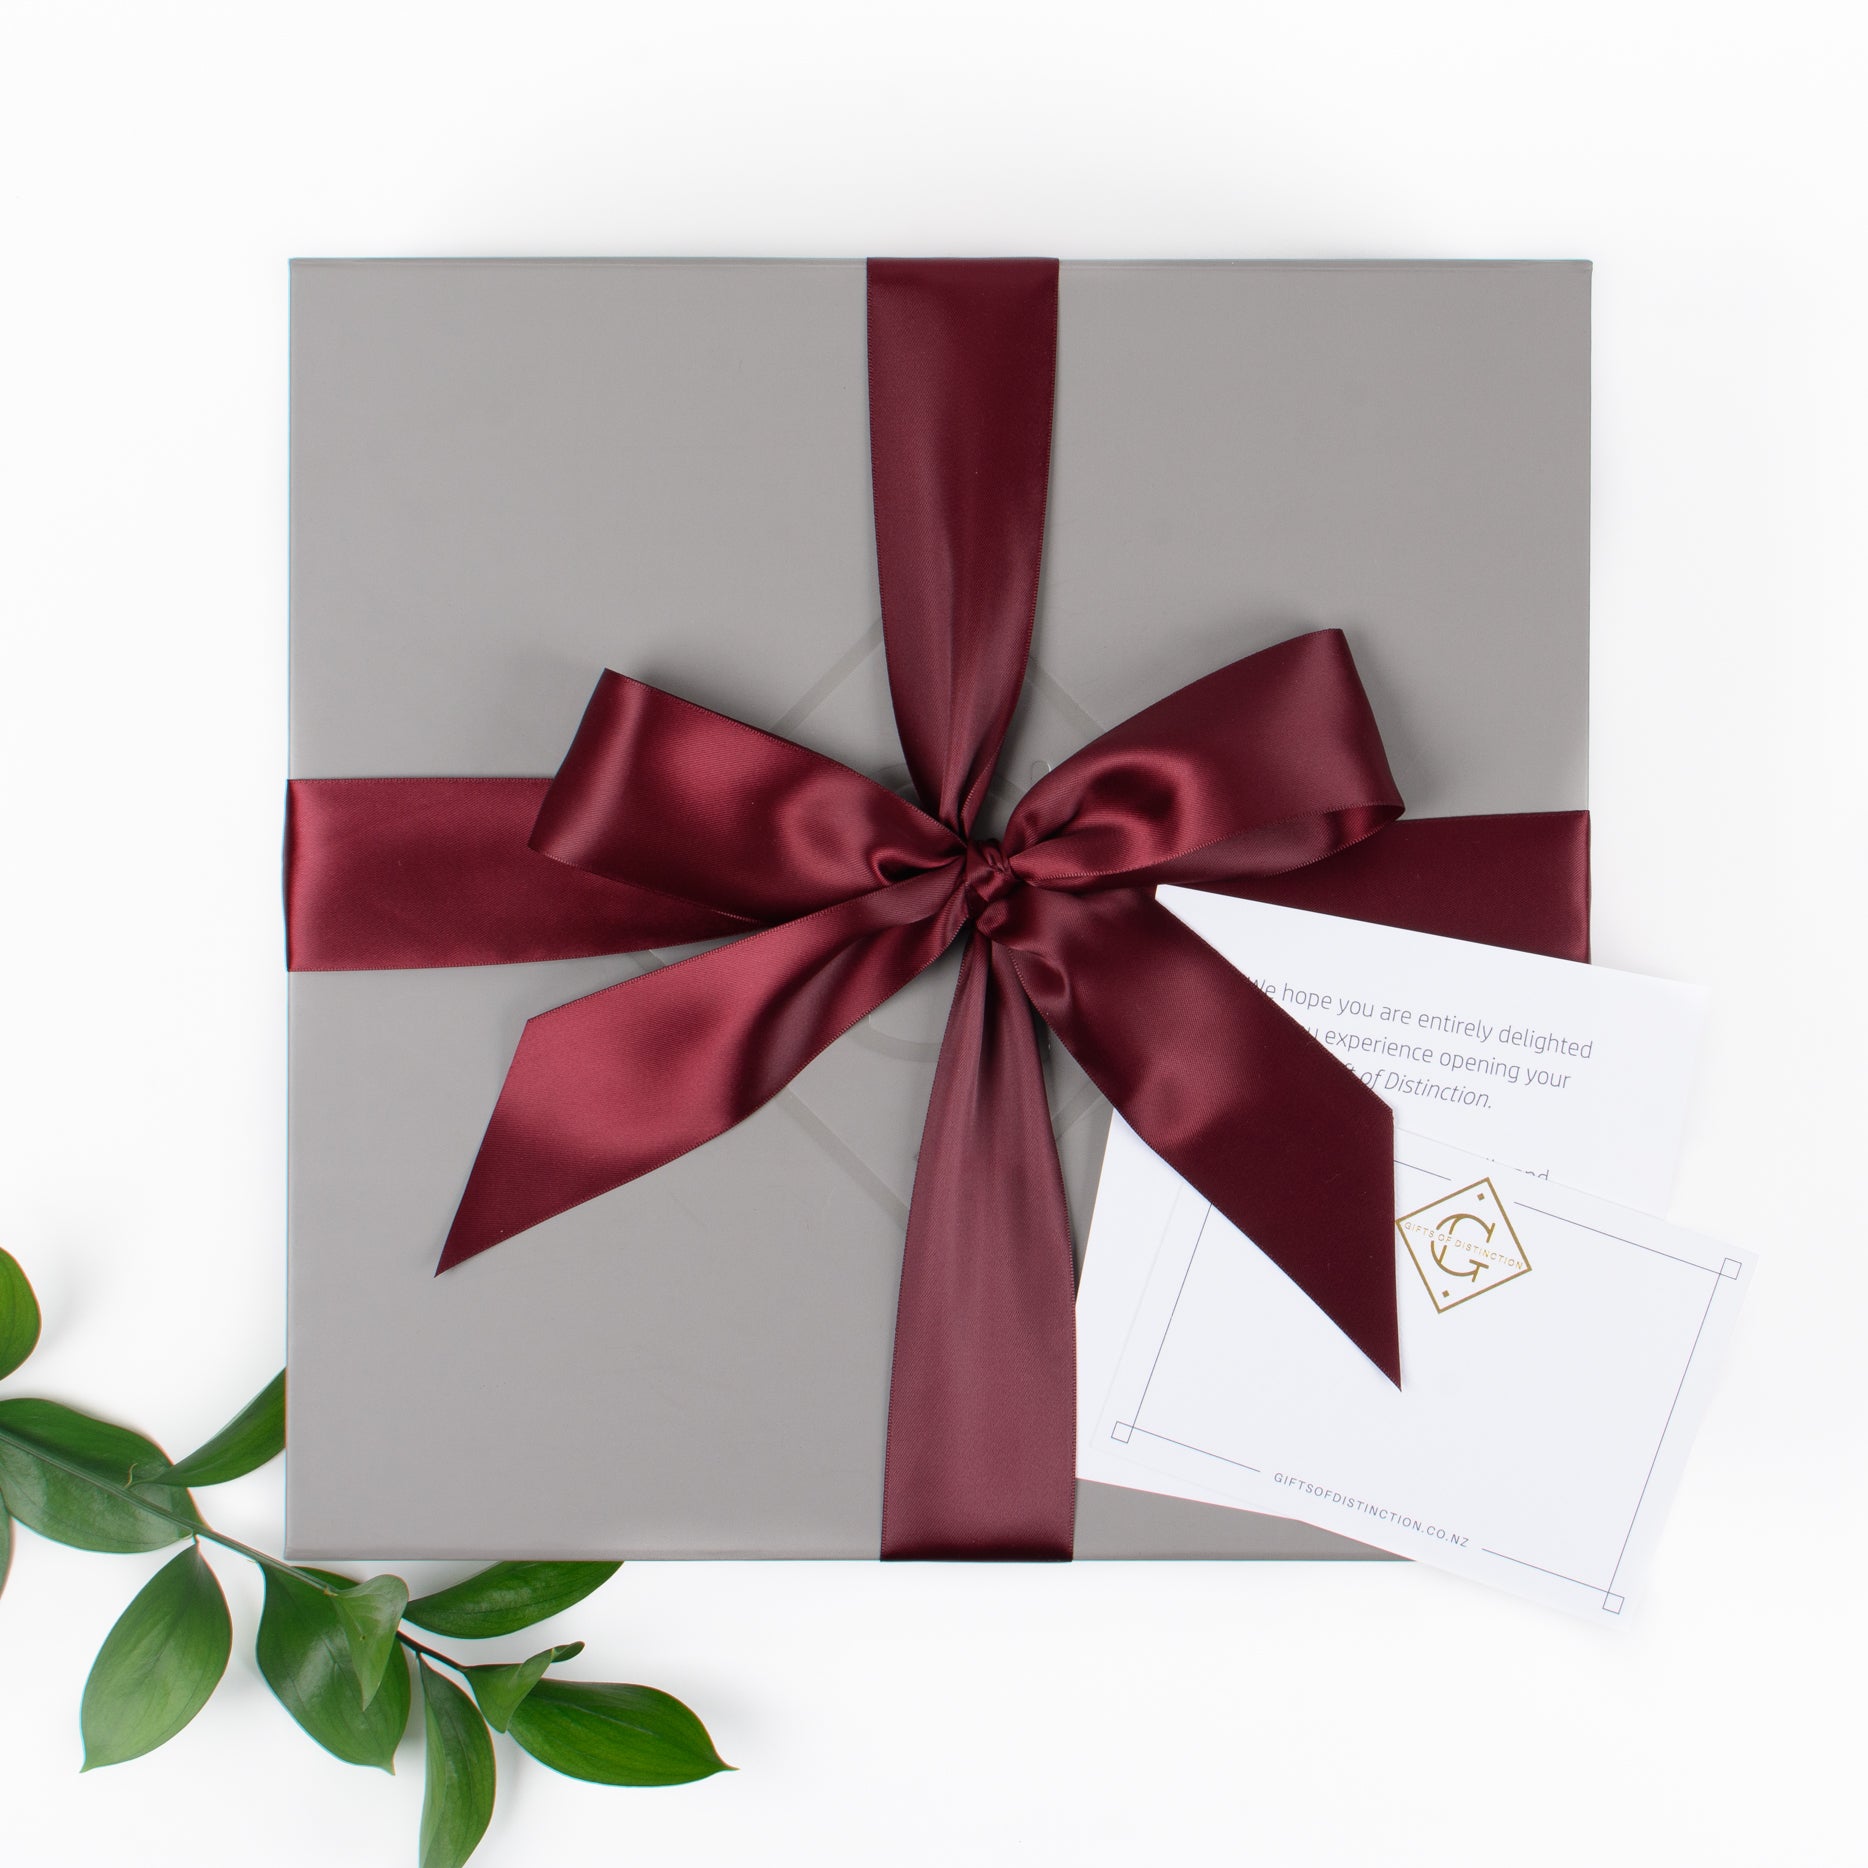 Grey gift box with satin ribbon and message card.